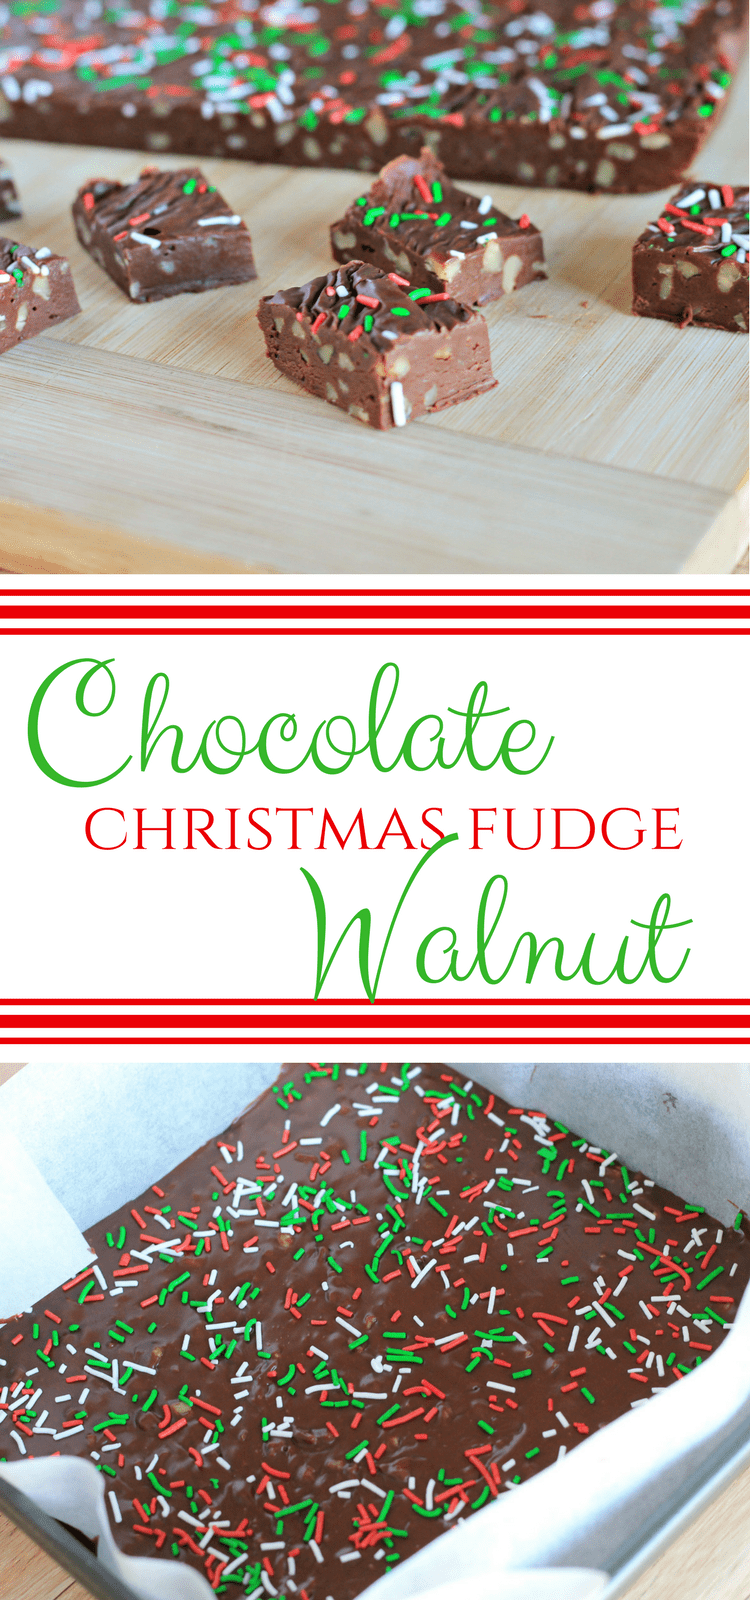 https://www.theoliveblogger.com/wp-content/uploads/2017/12/Chocolate-Walnut-Fudge-Recipe.png